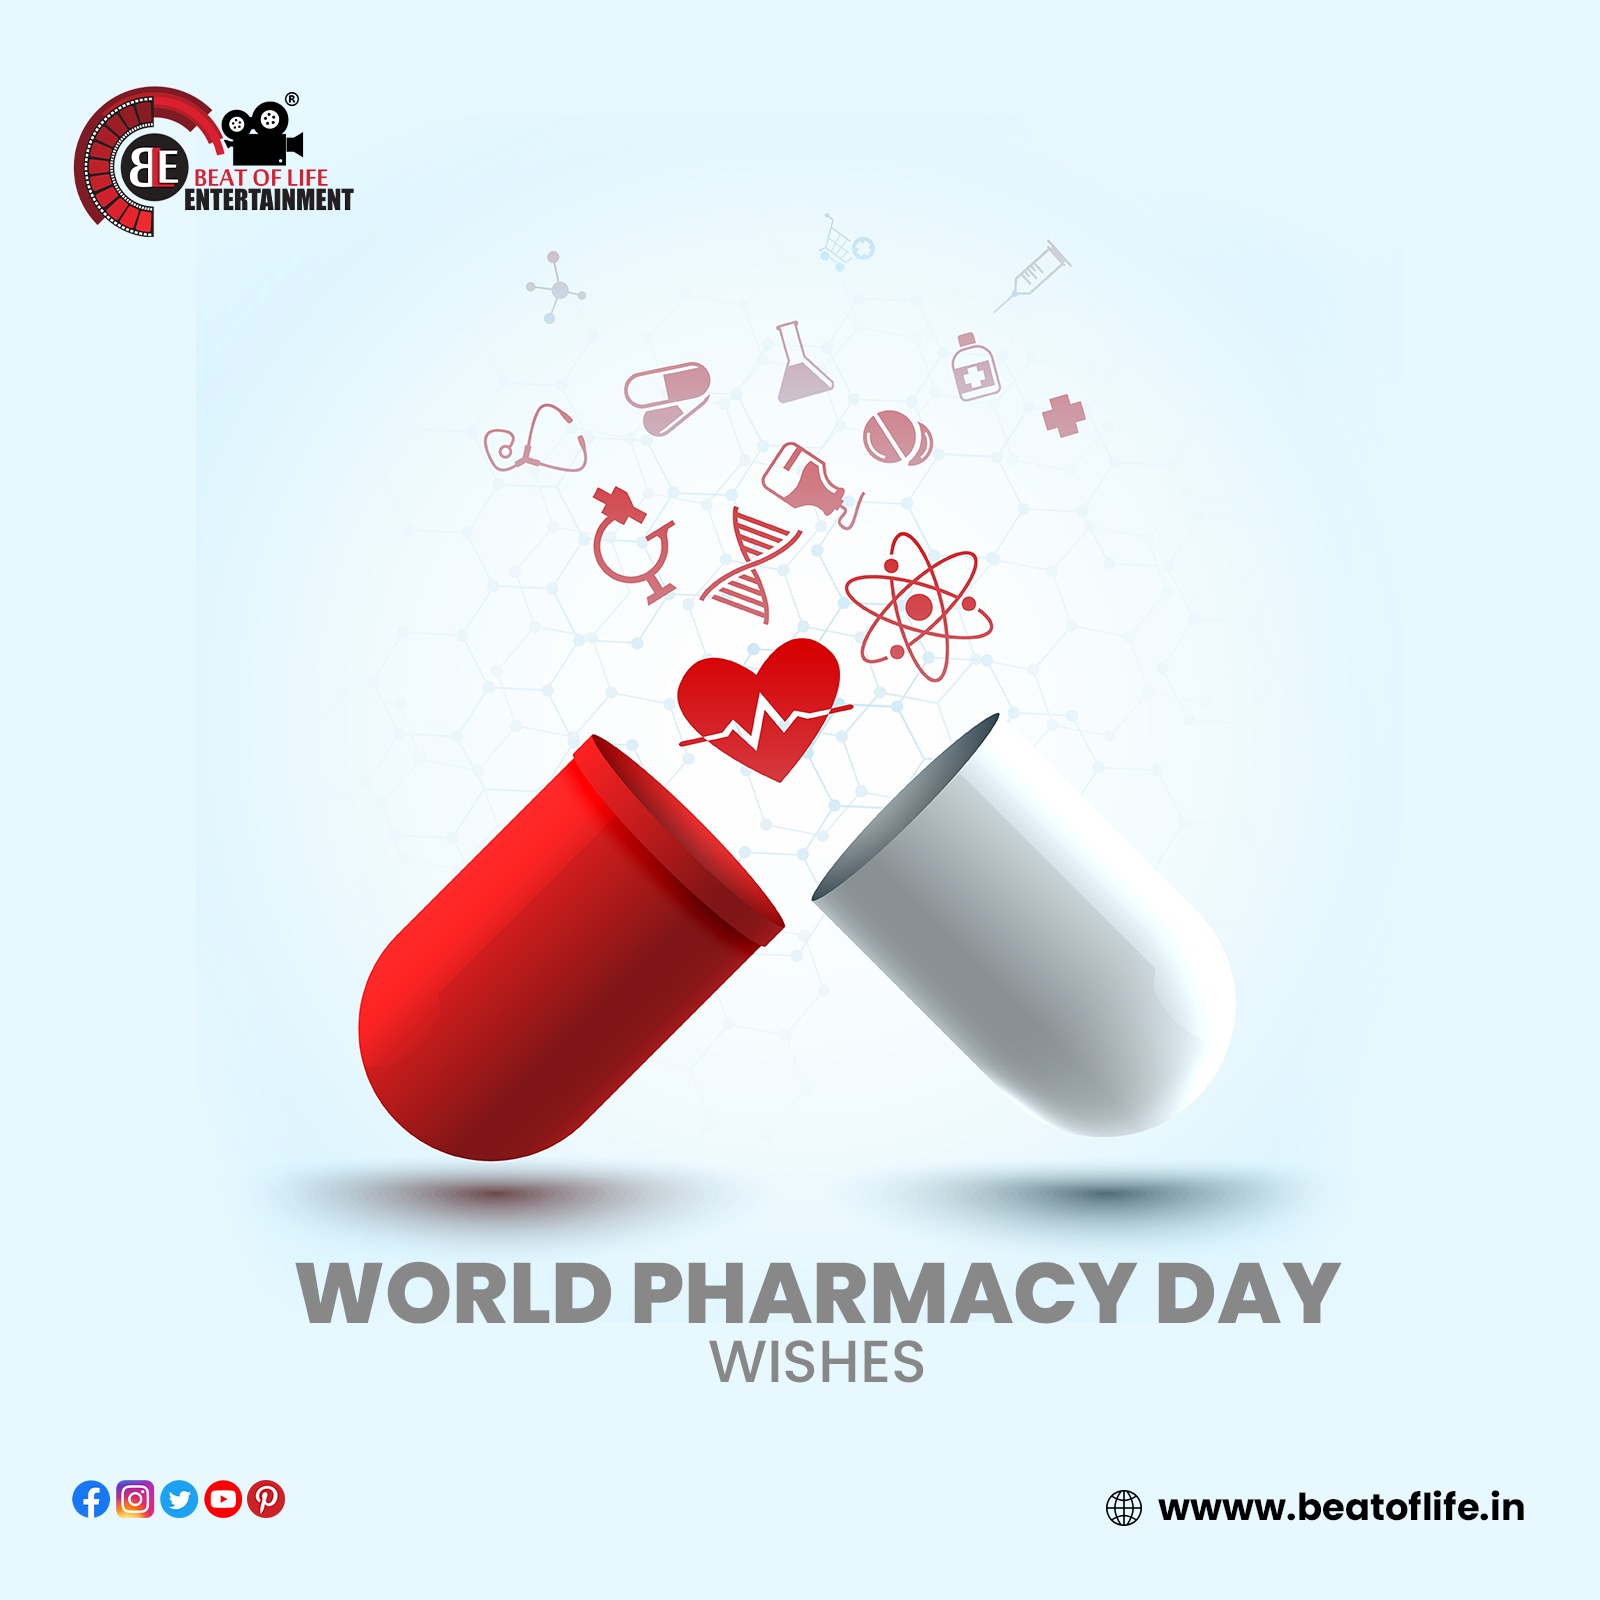 World Pharmacy Day wishes